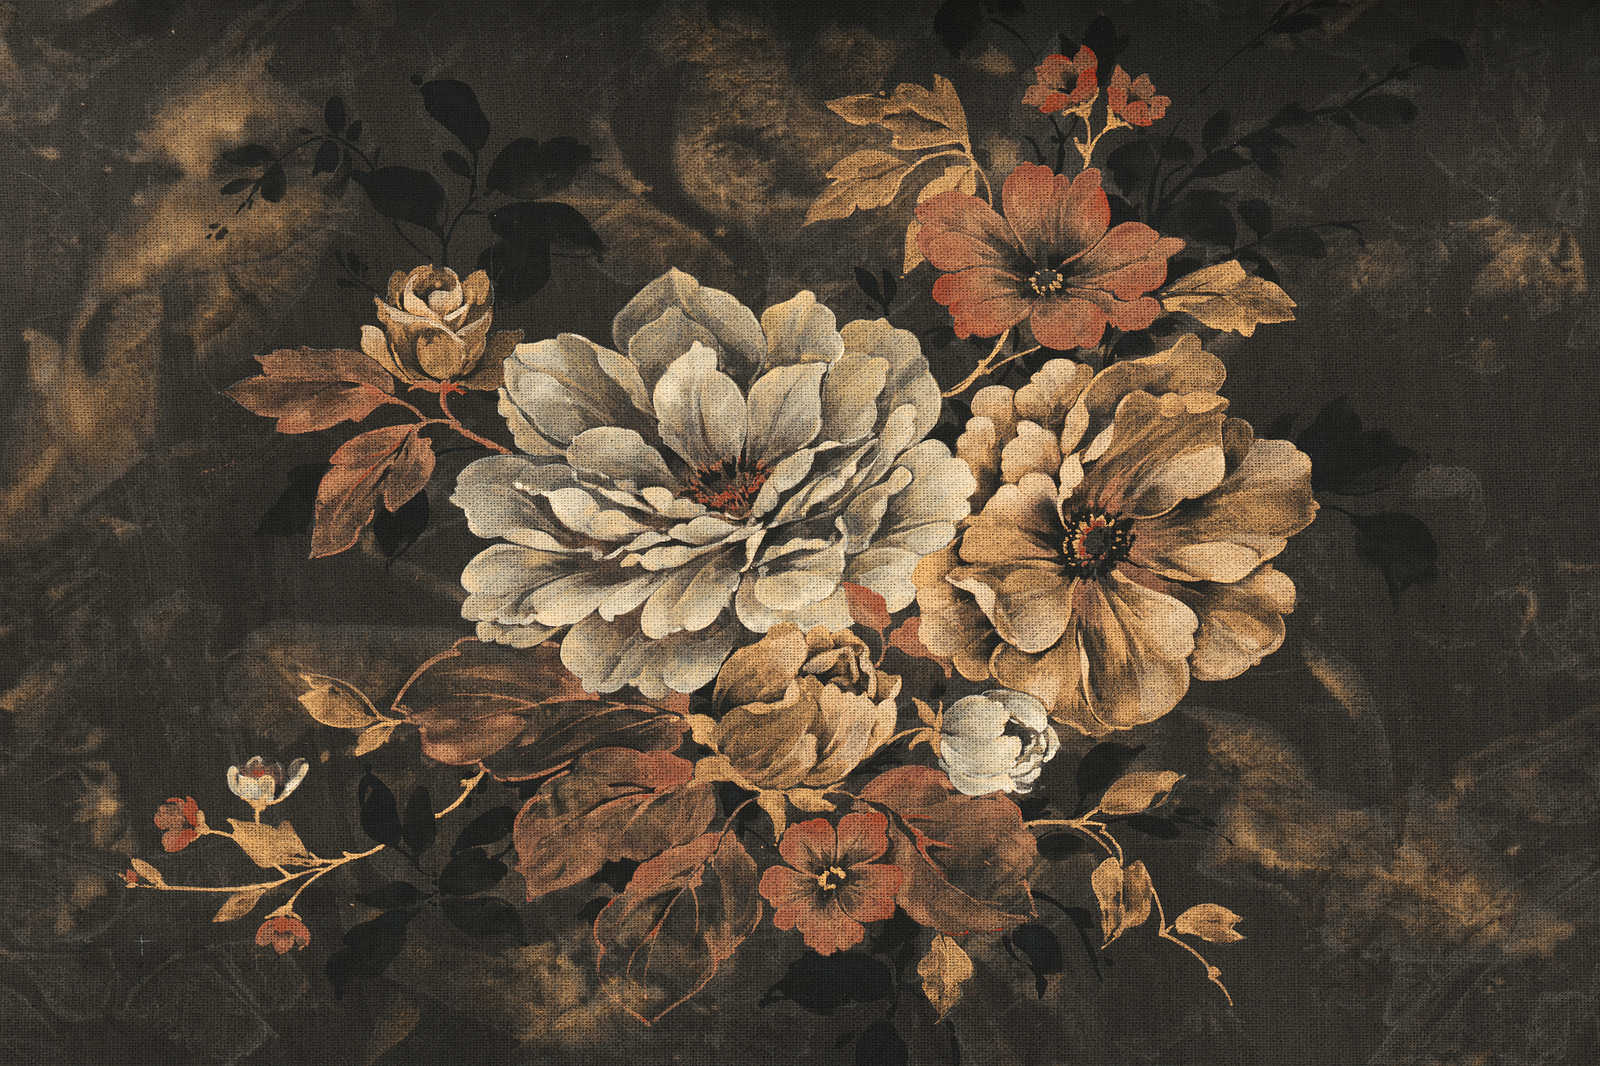             Leinwandbild Blütendesign, Ölgemälde im Vintage Look – 1,20 m x 0,80 m
        